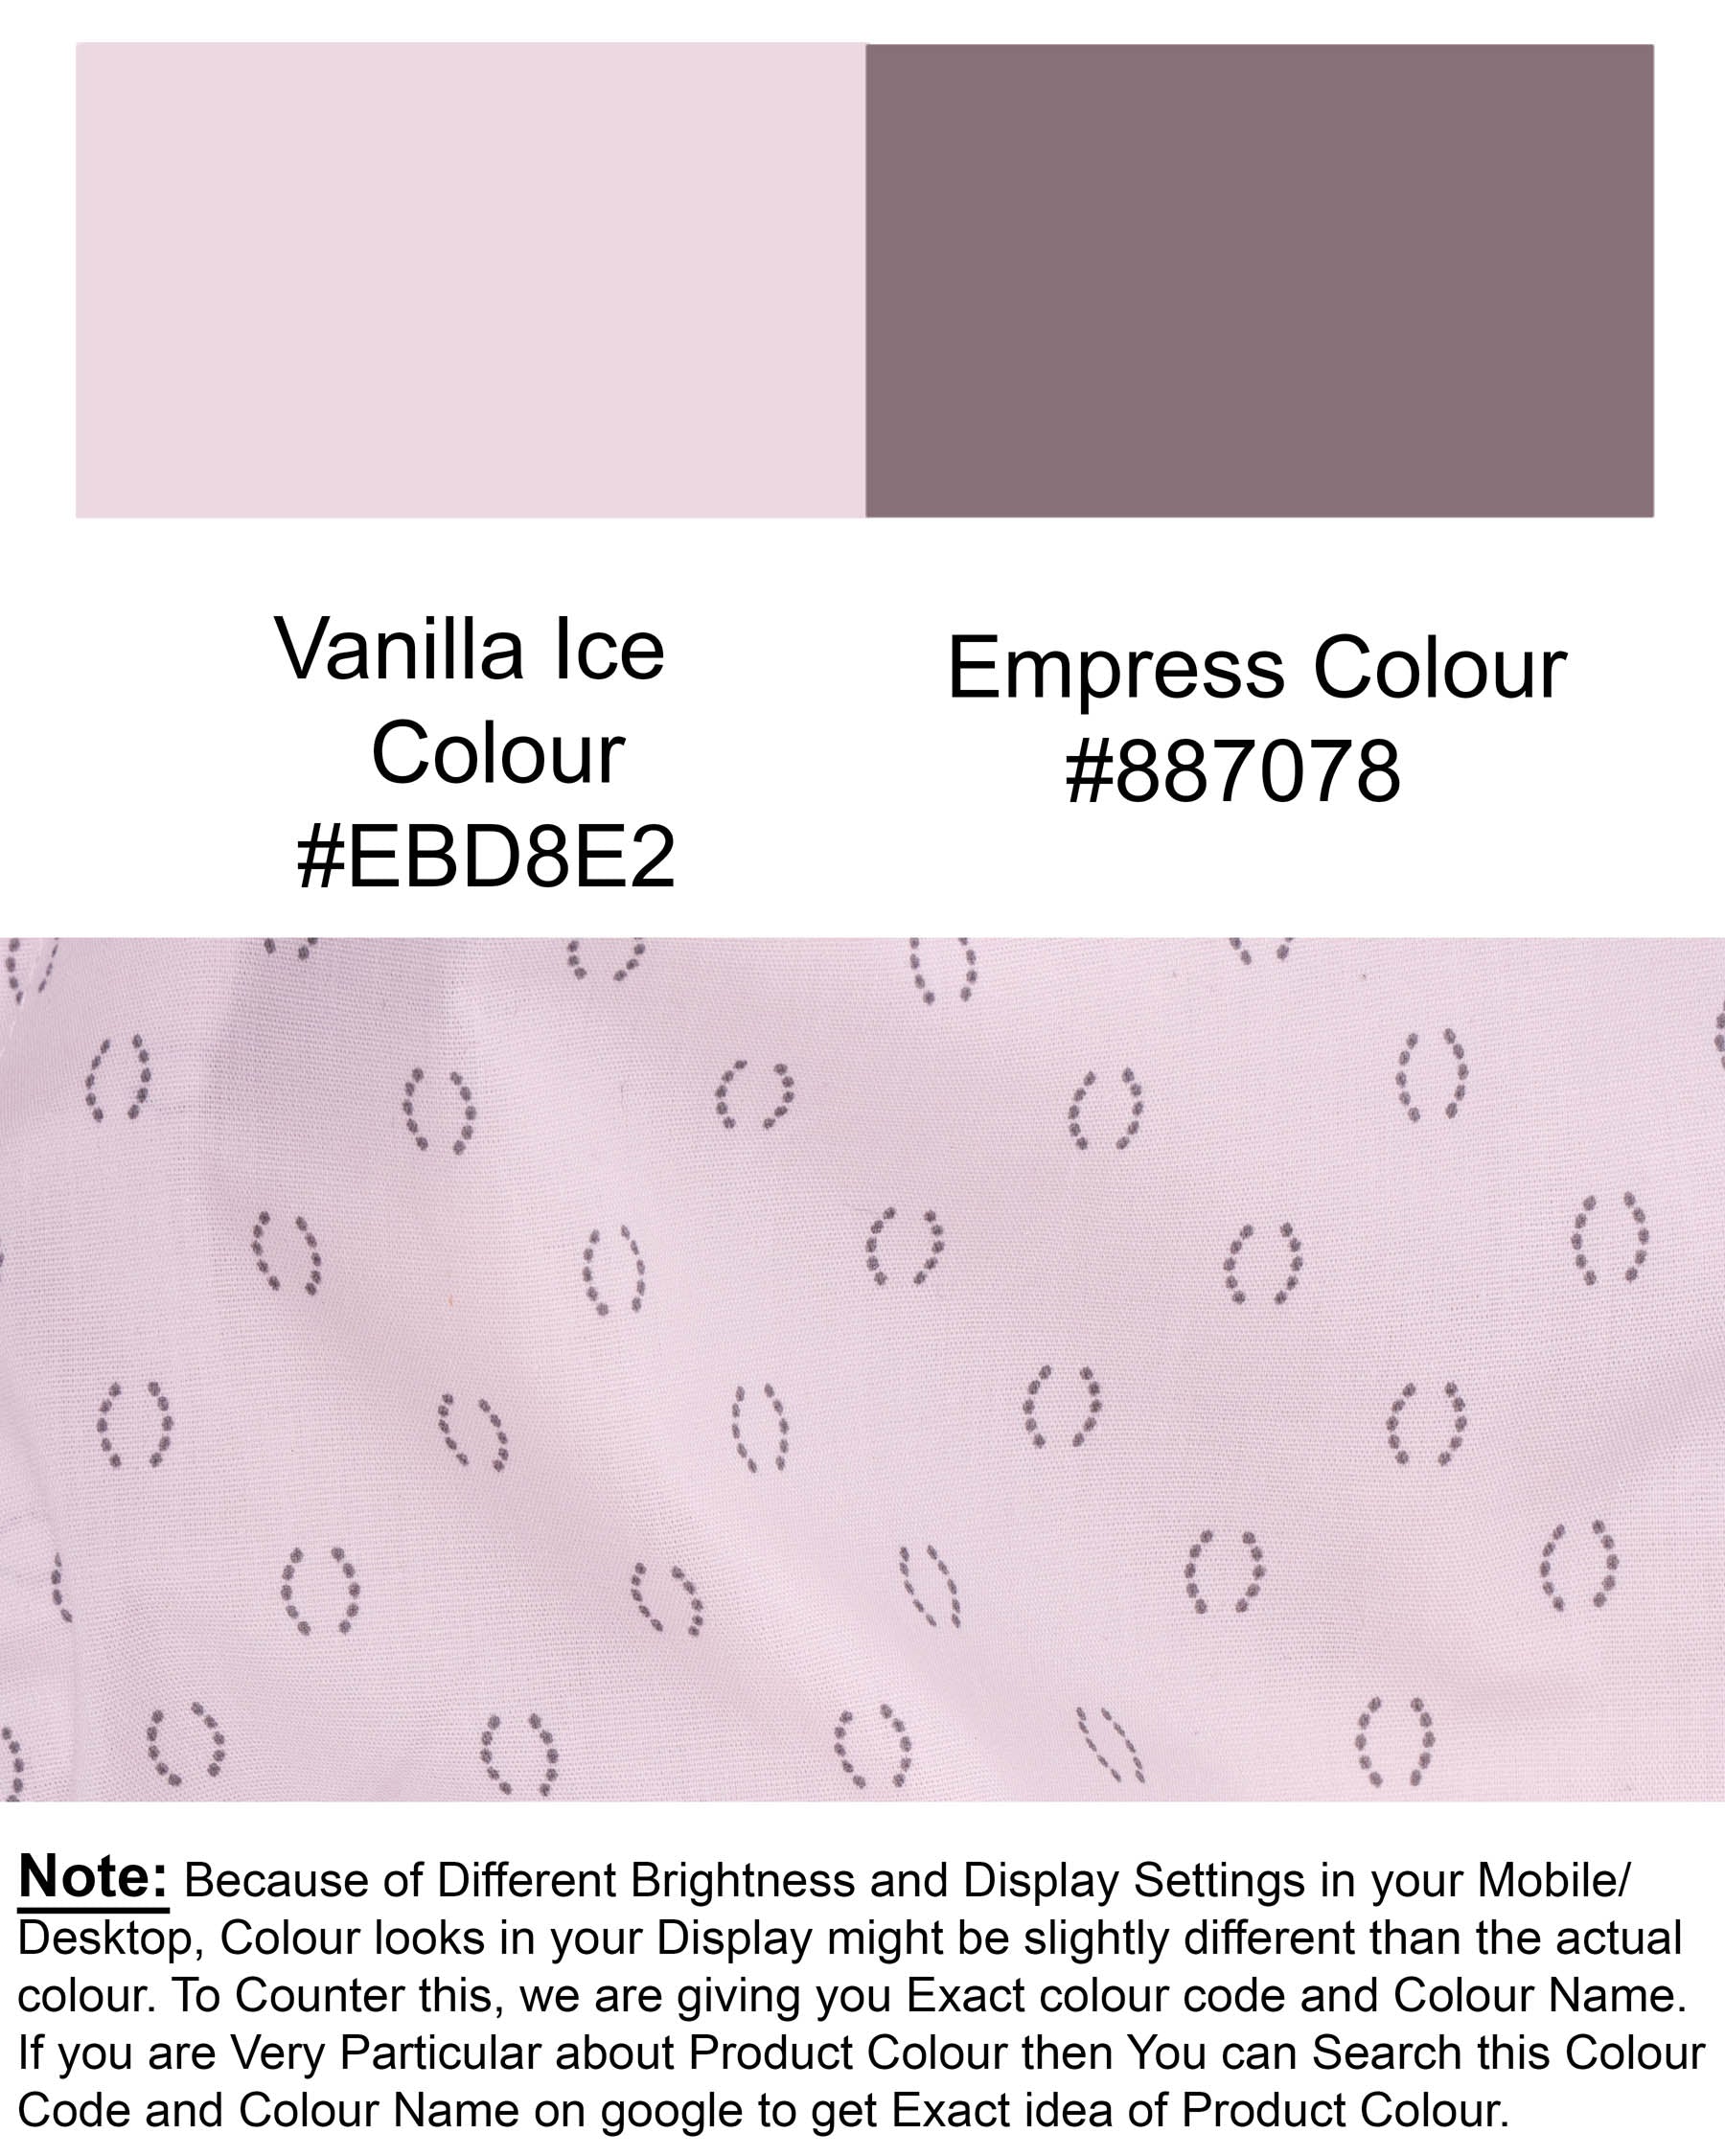 Vanilla Ice Printed Premium Cotton Shorts SR136-28, SR136-30, SR136-32, SR136-34, SR136-36, SR136-38, SR136-40, SR136-42, SR136-44